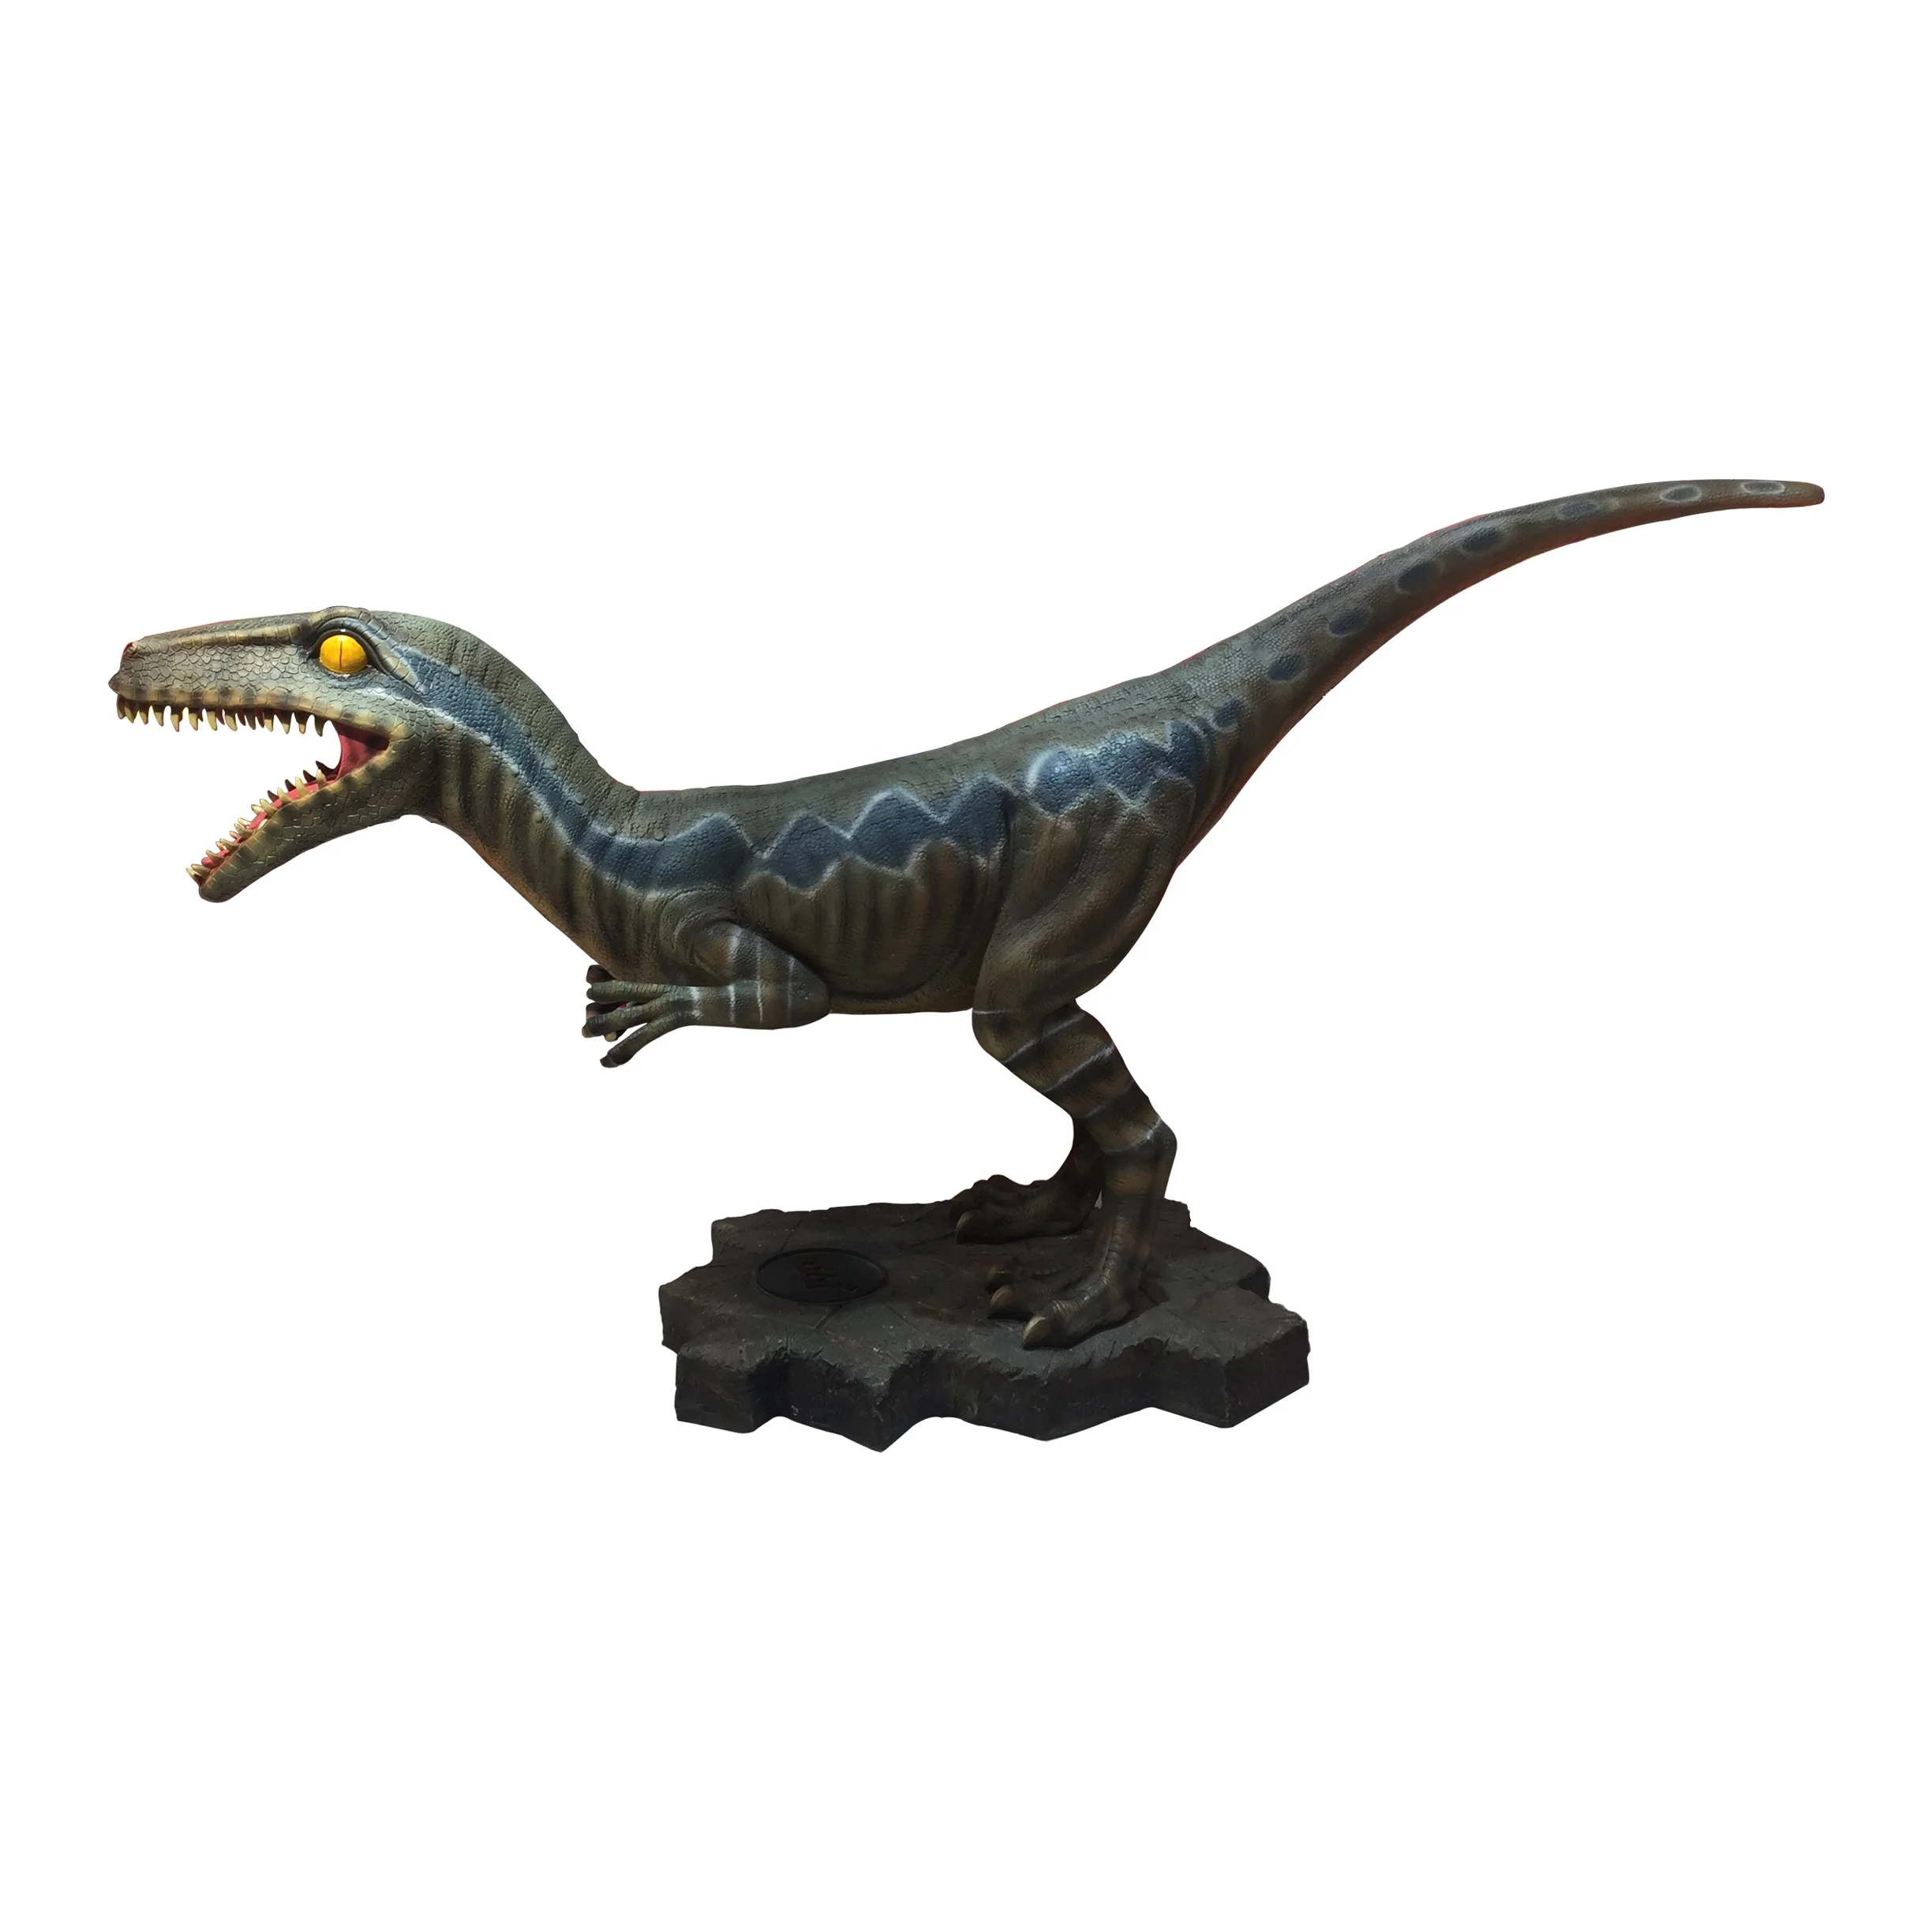 
Artificial Fiberglass Life Size Dinosaur Statues 